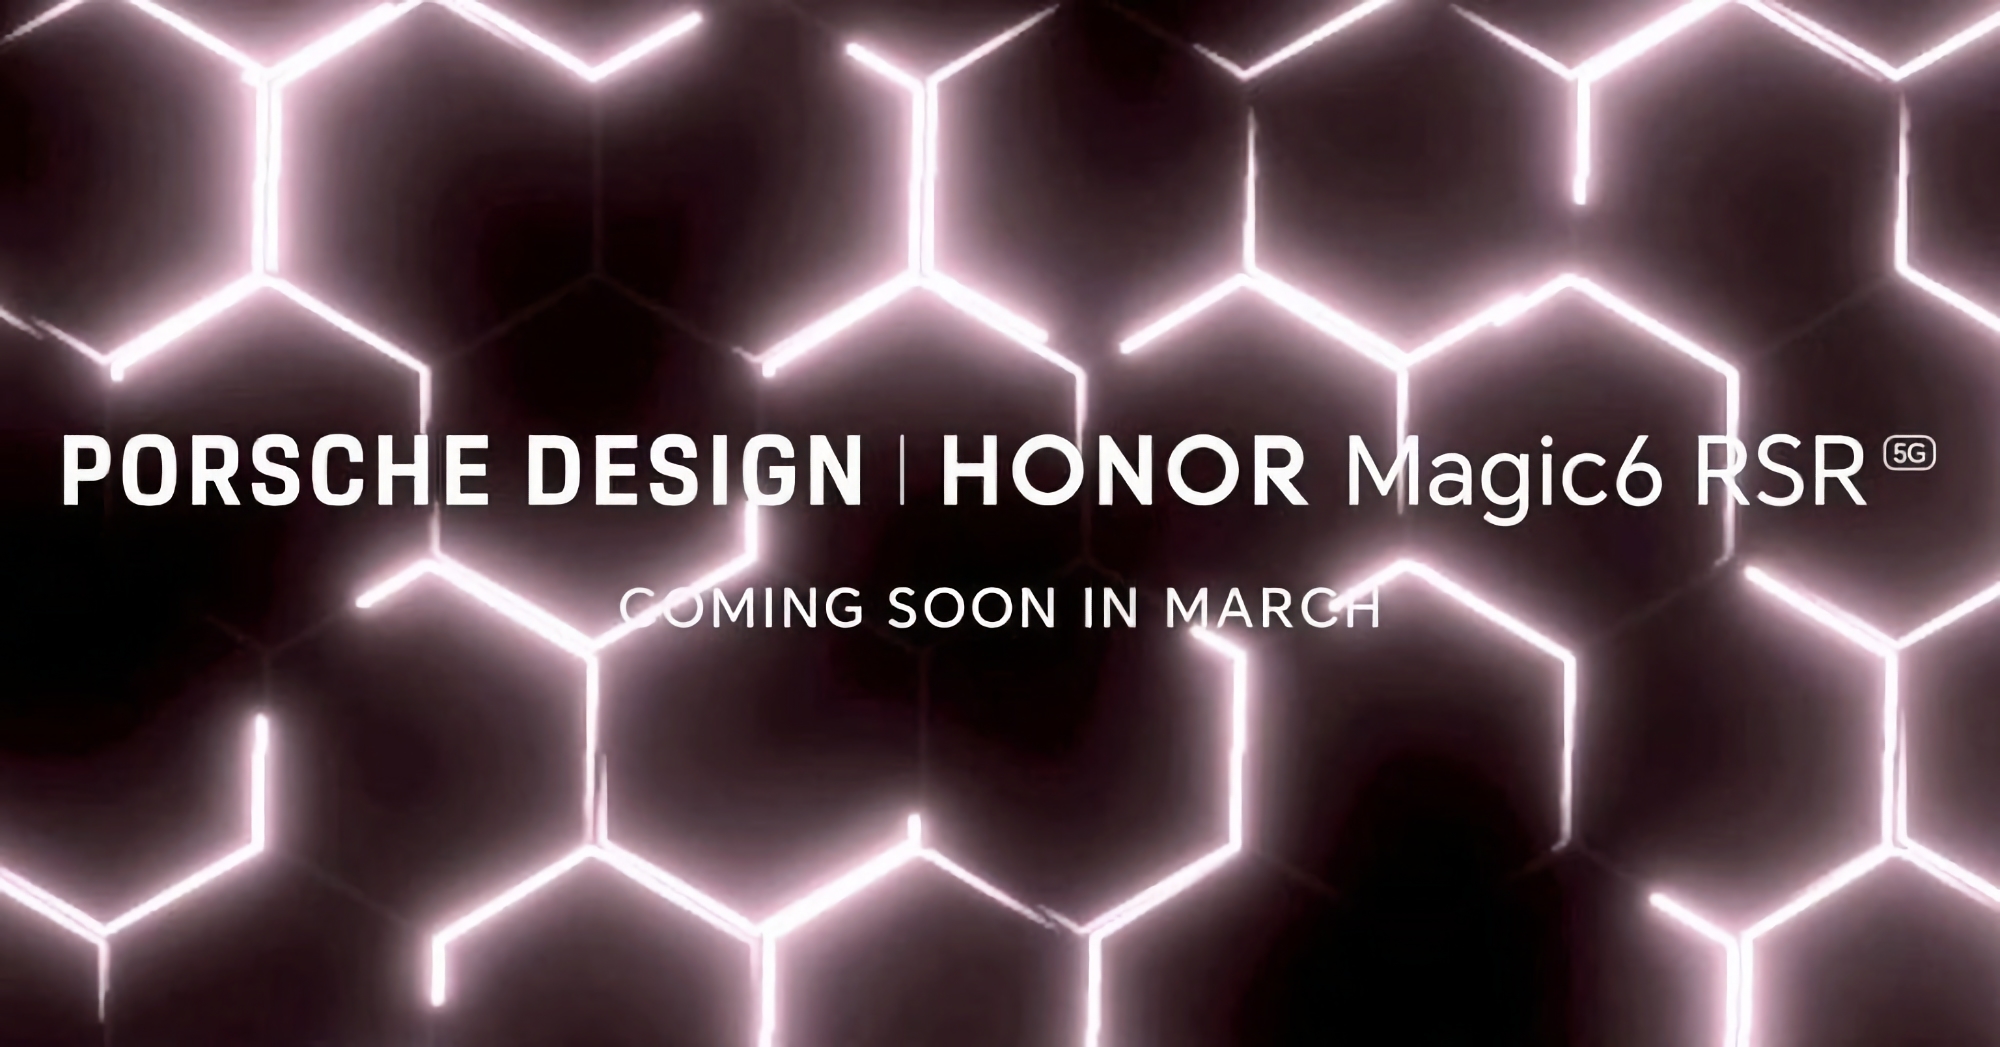 Honor zaprezentuje Magic 6 RSR Porsche Design w marcu